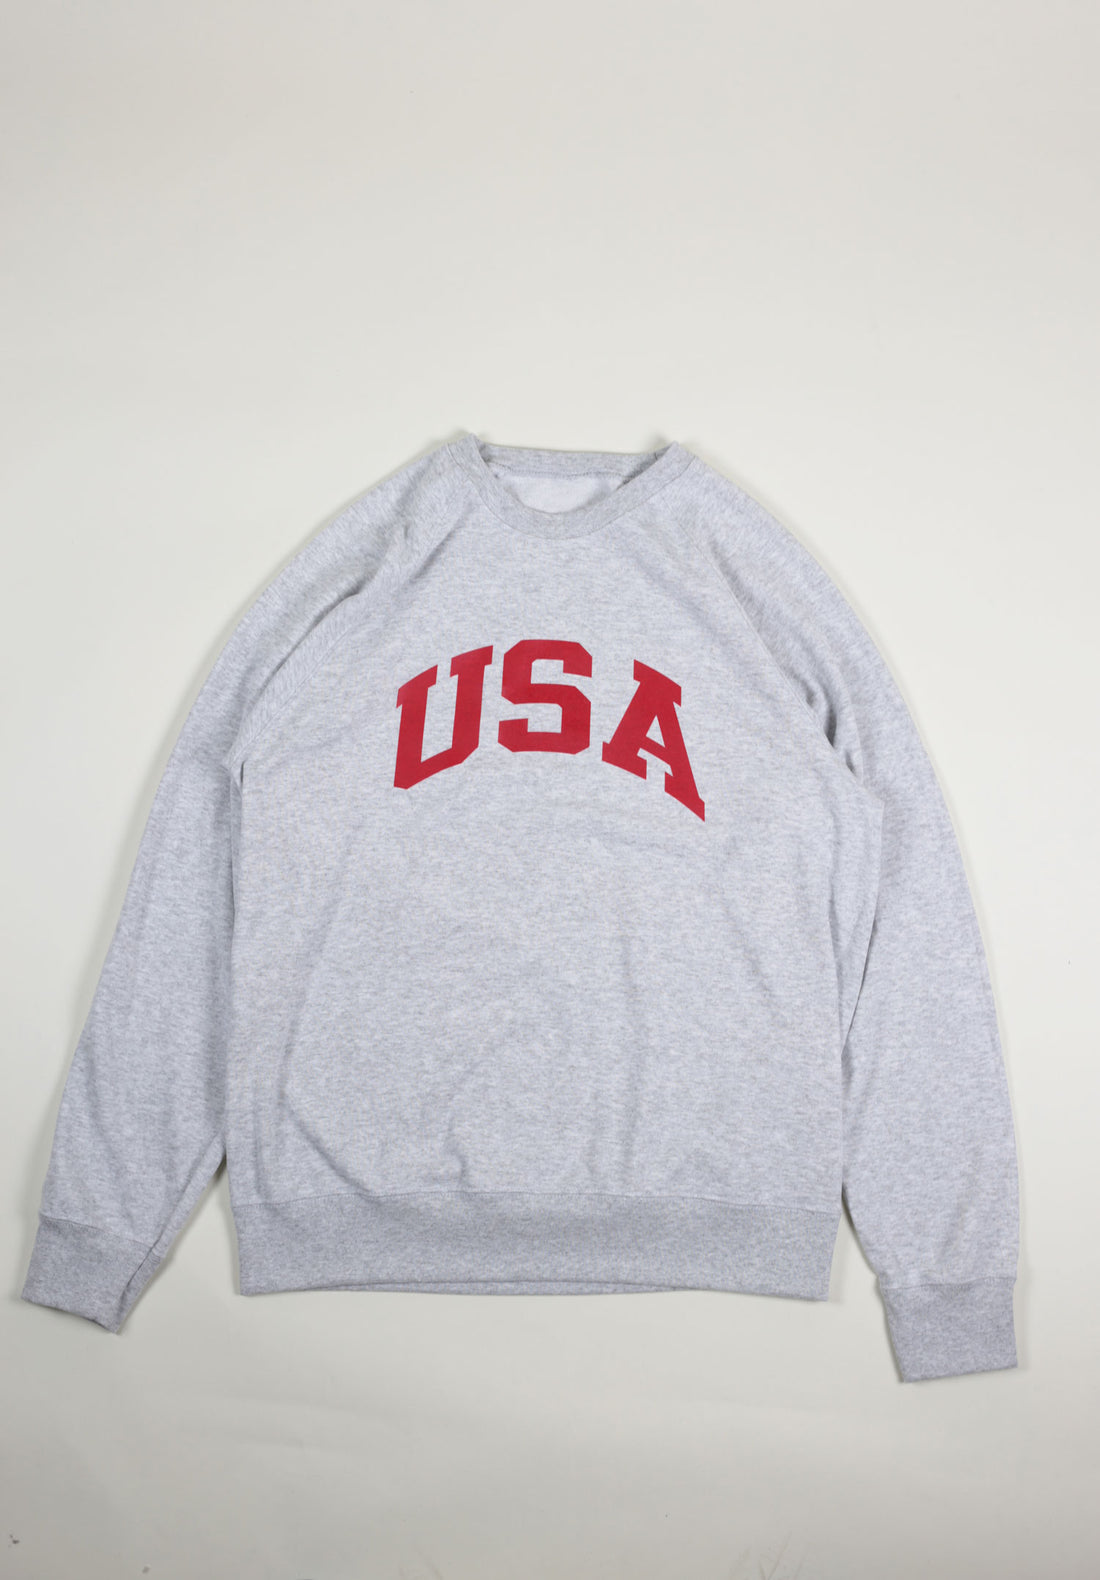 USA raglan sweatshirt